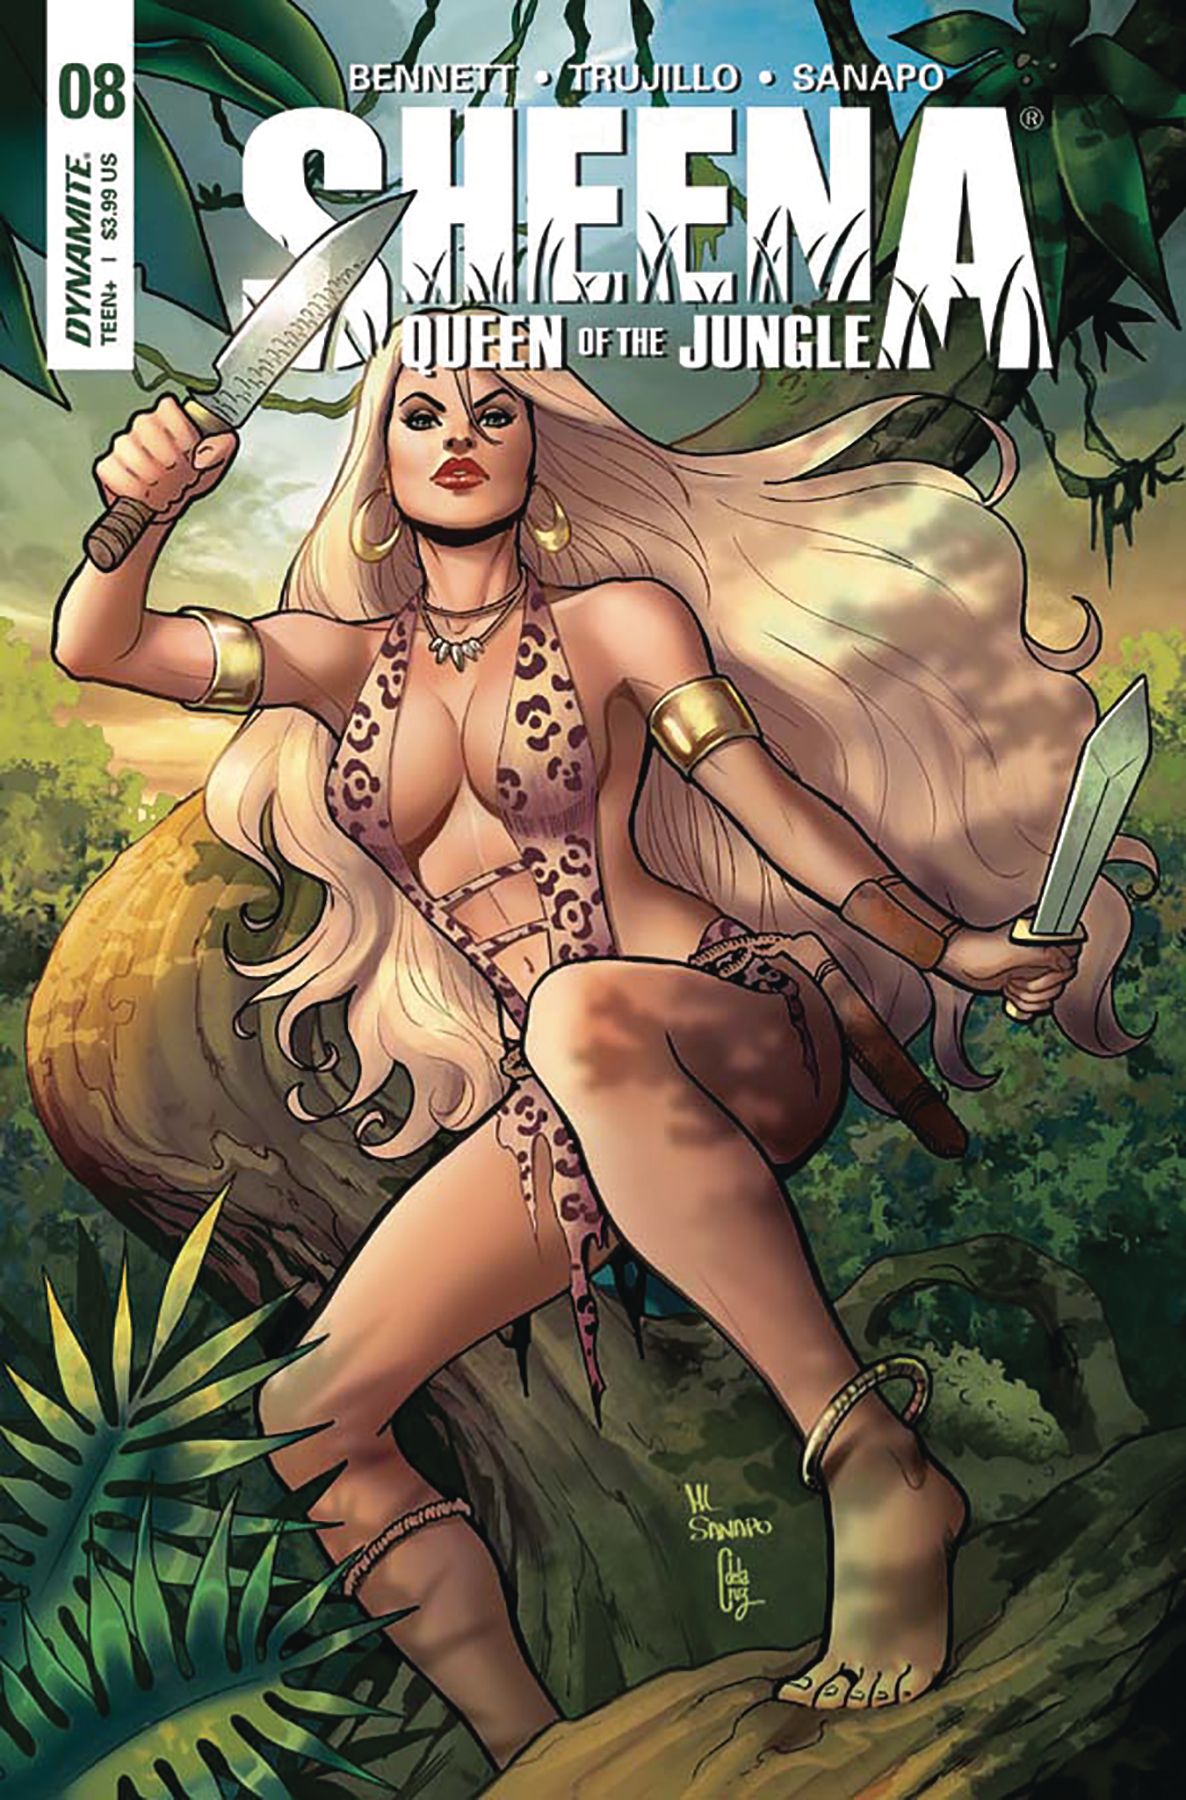 Sheena Queen of the Jungle #8 Comic